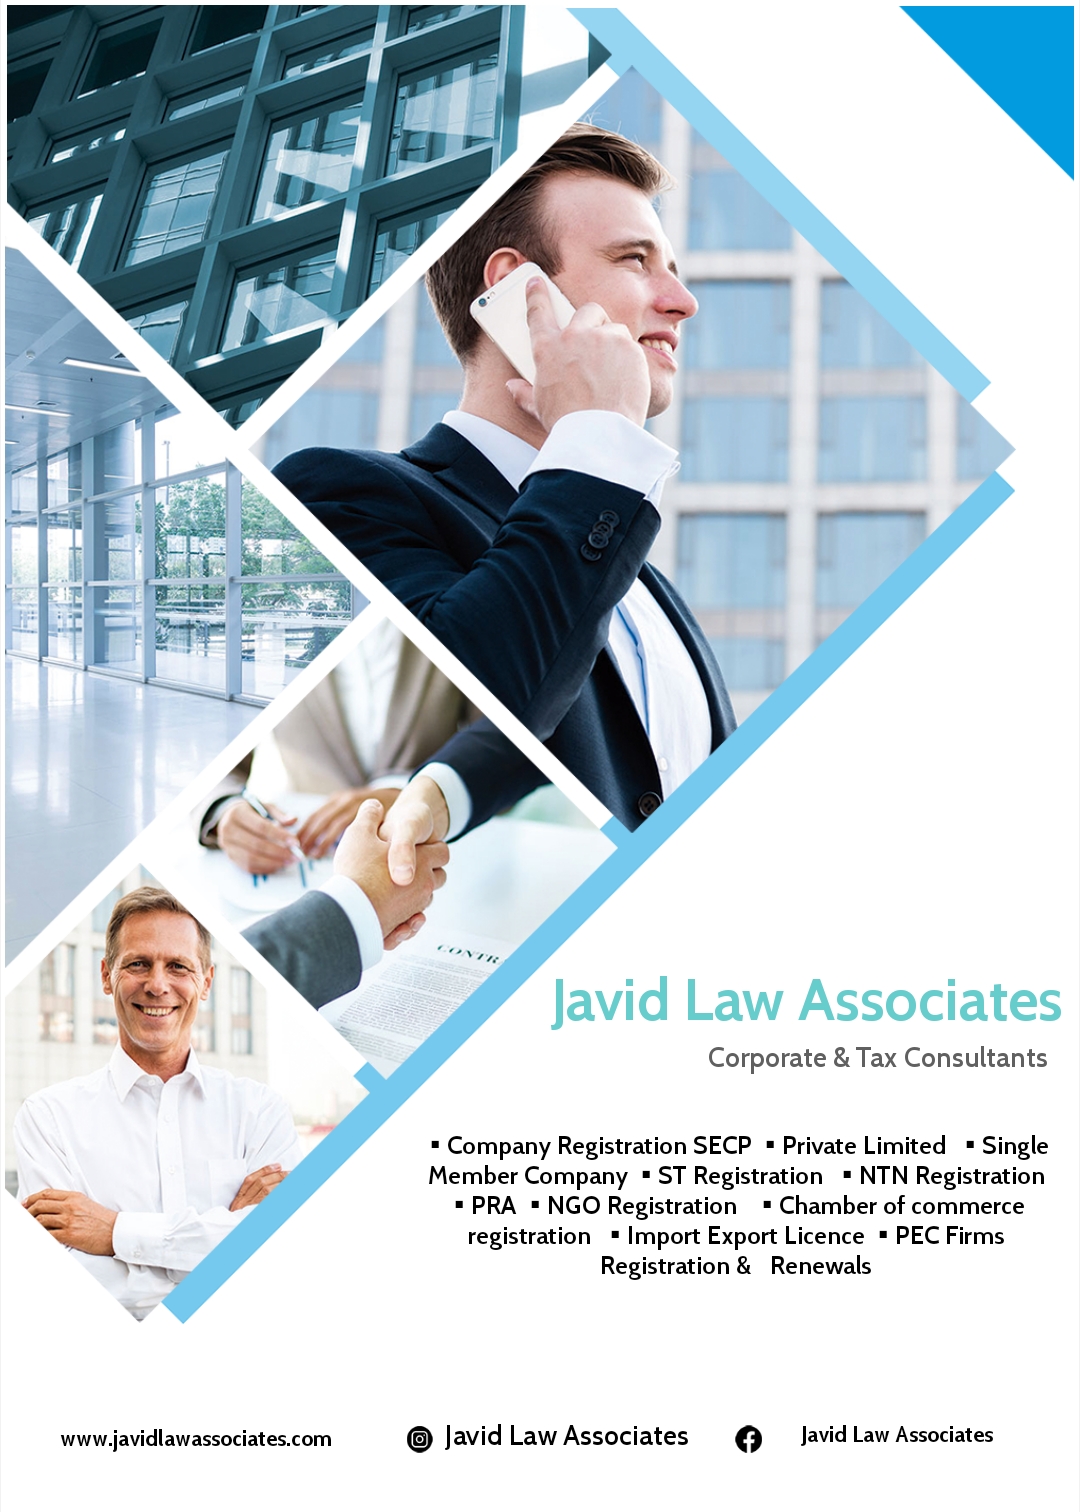 Javid Law Associates